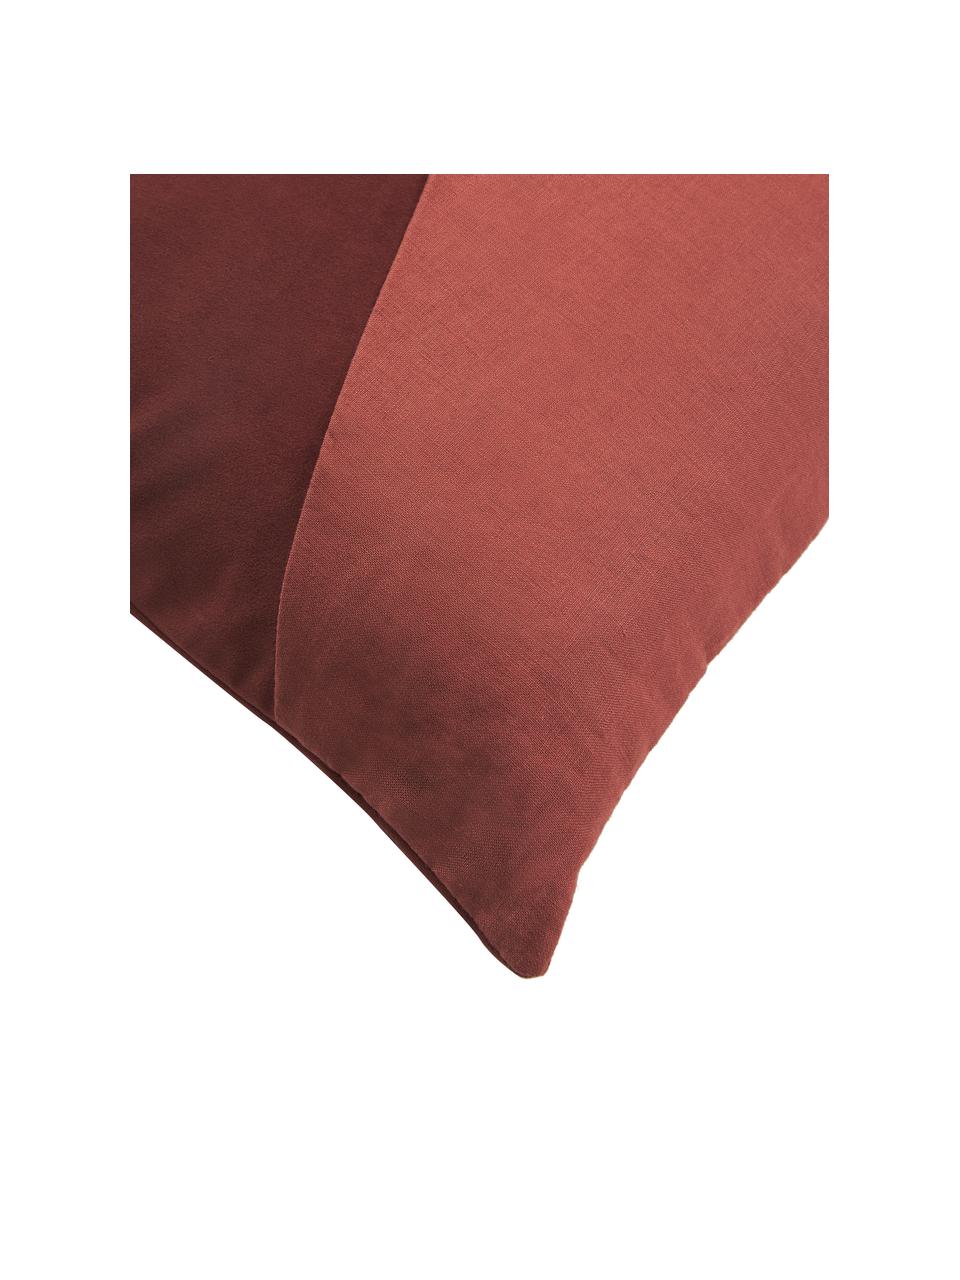 Kussenhoes Adelaide van fluweel/linnen in rood, Rood, B 45 x L 45 cm